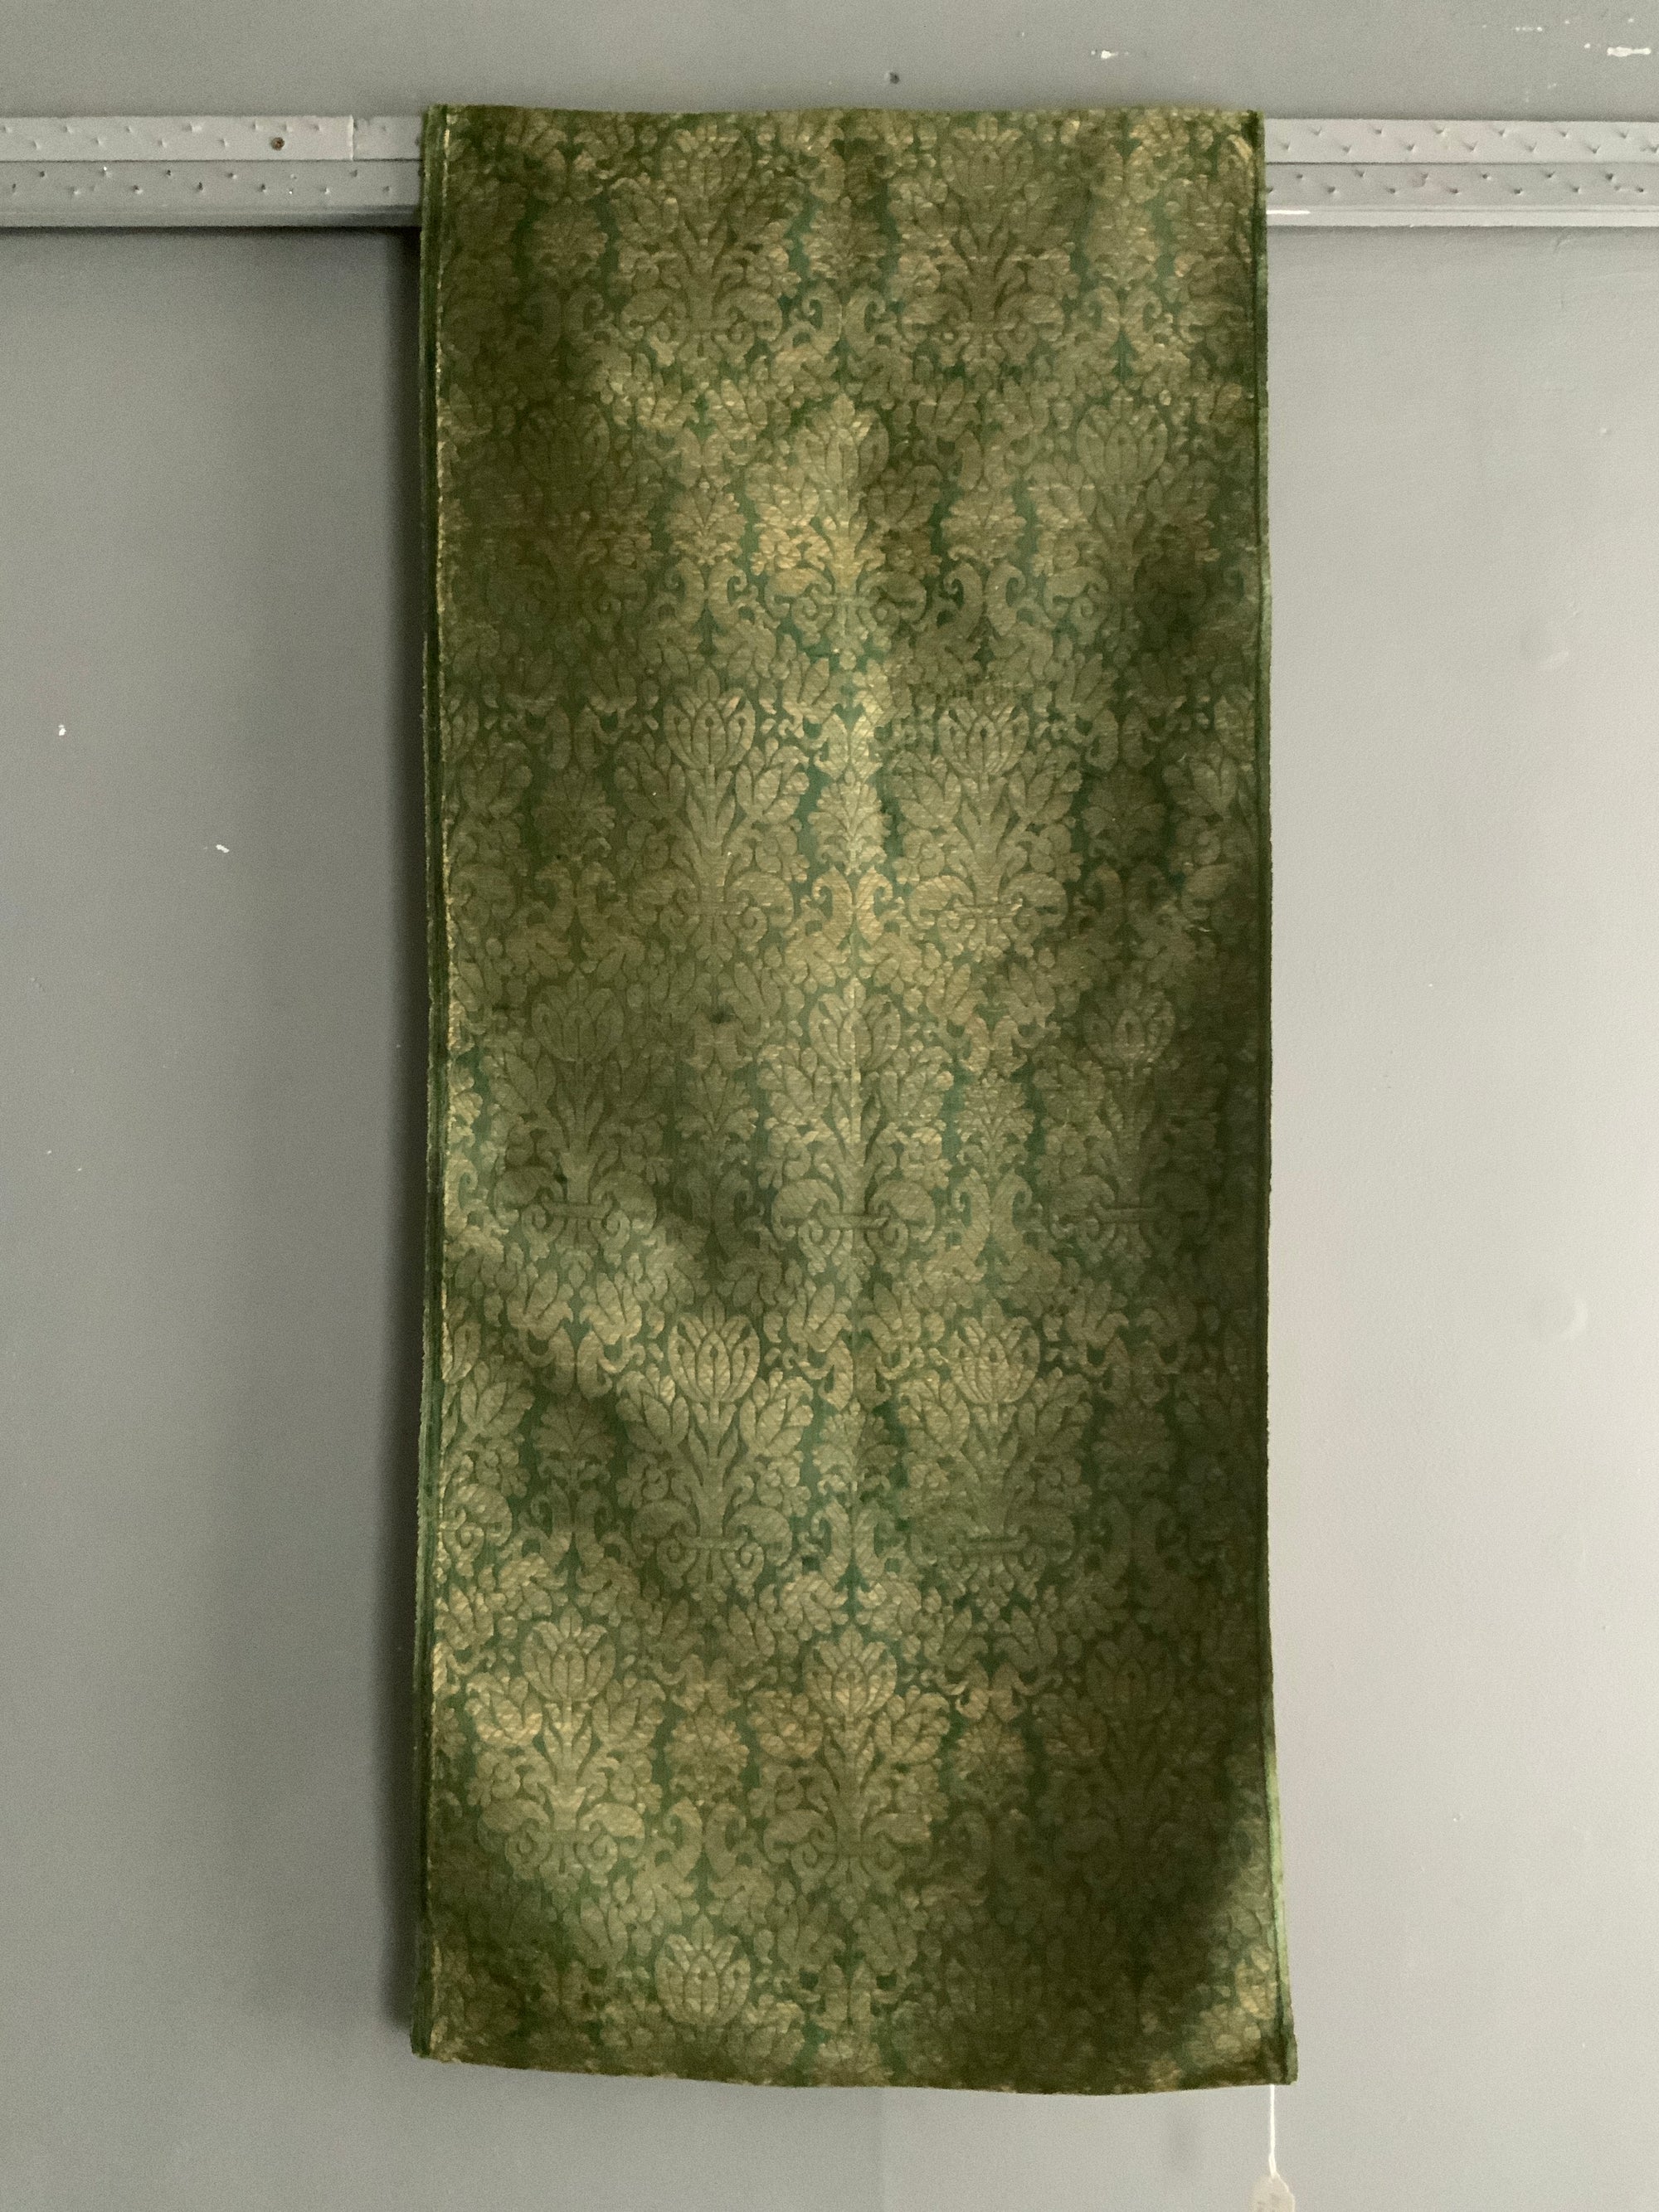 Italian style brocade on green (117 x 52)